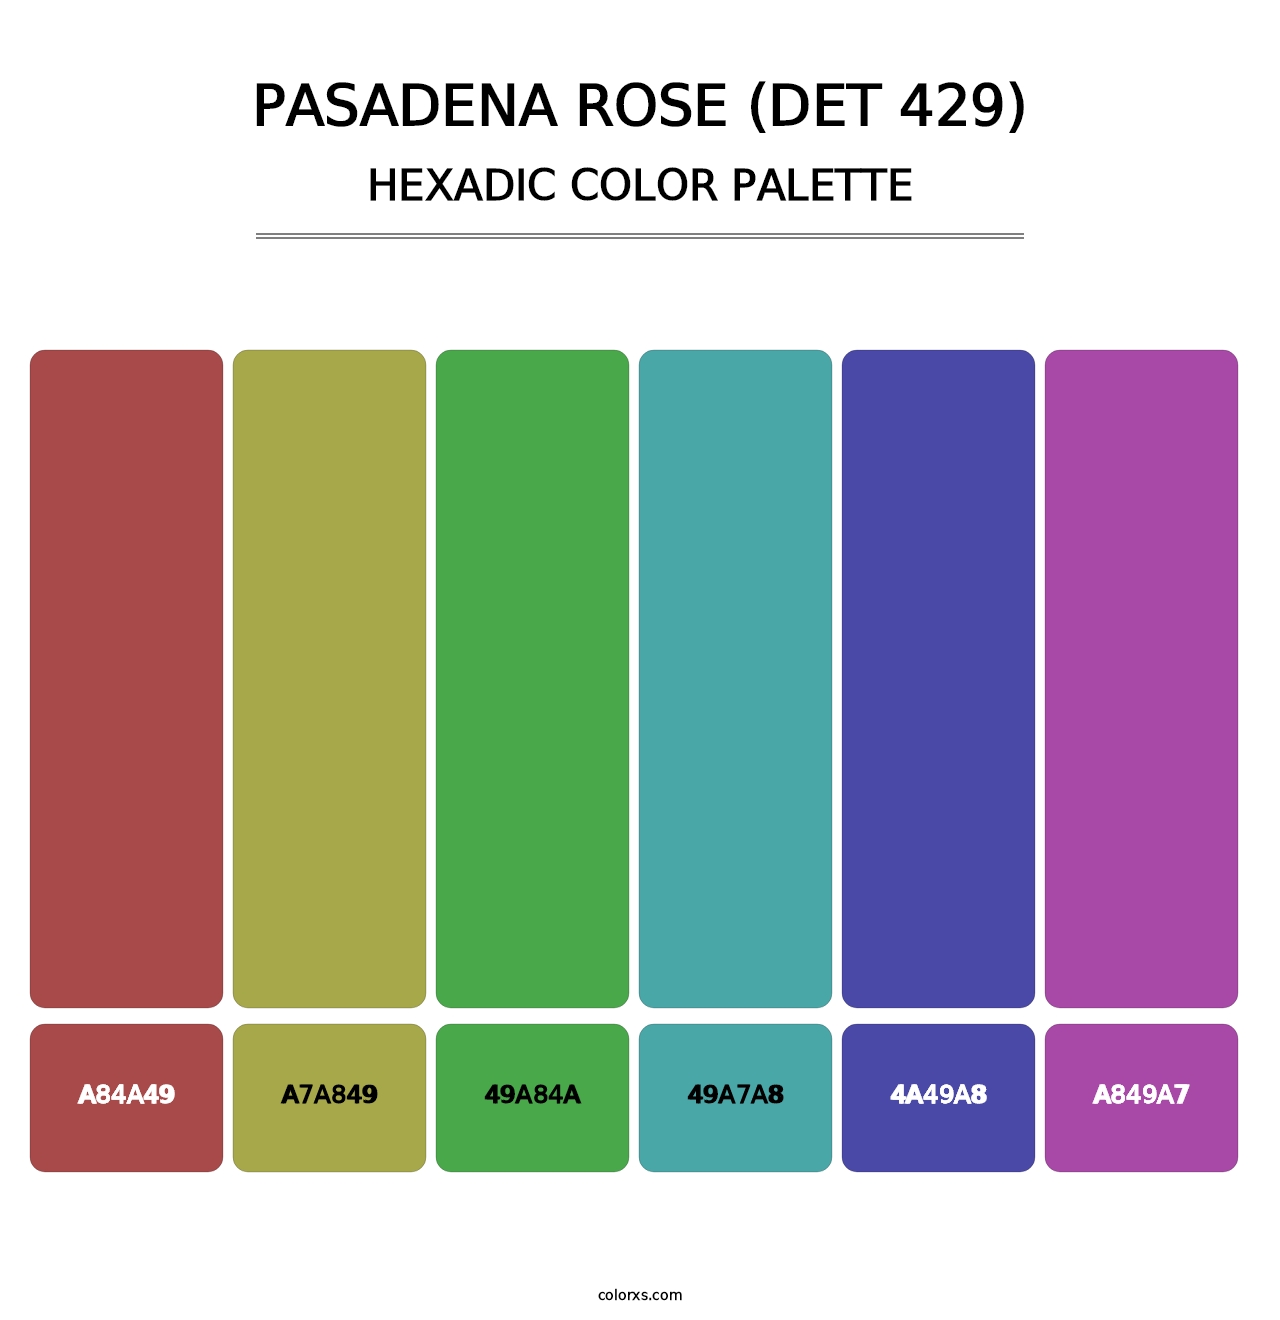 Pasadena Rose (DET 429) - Hexadic Color Palette